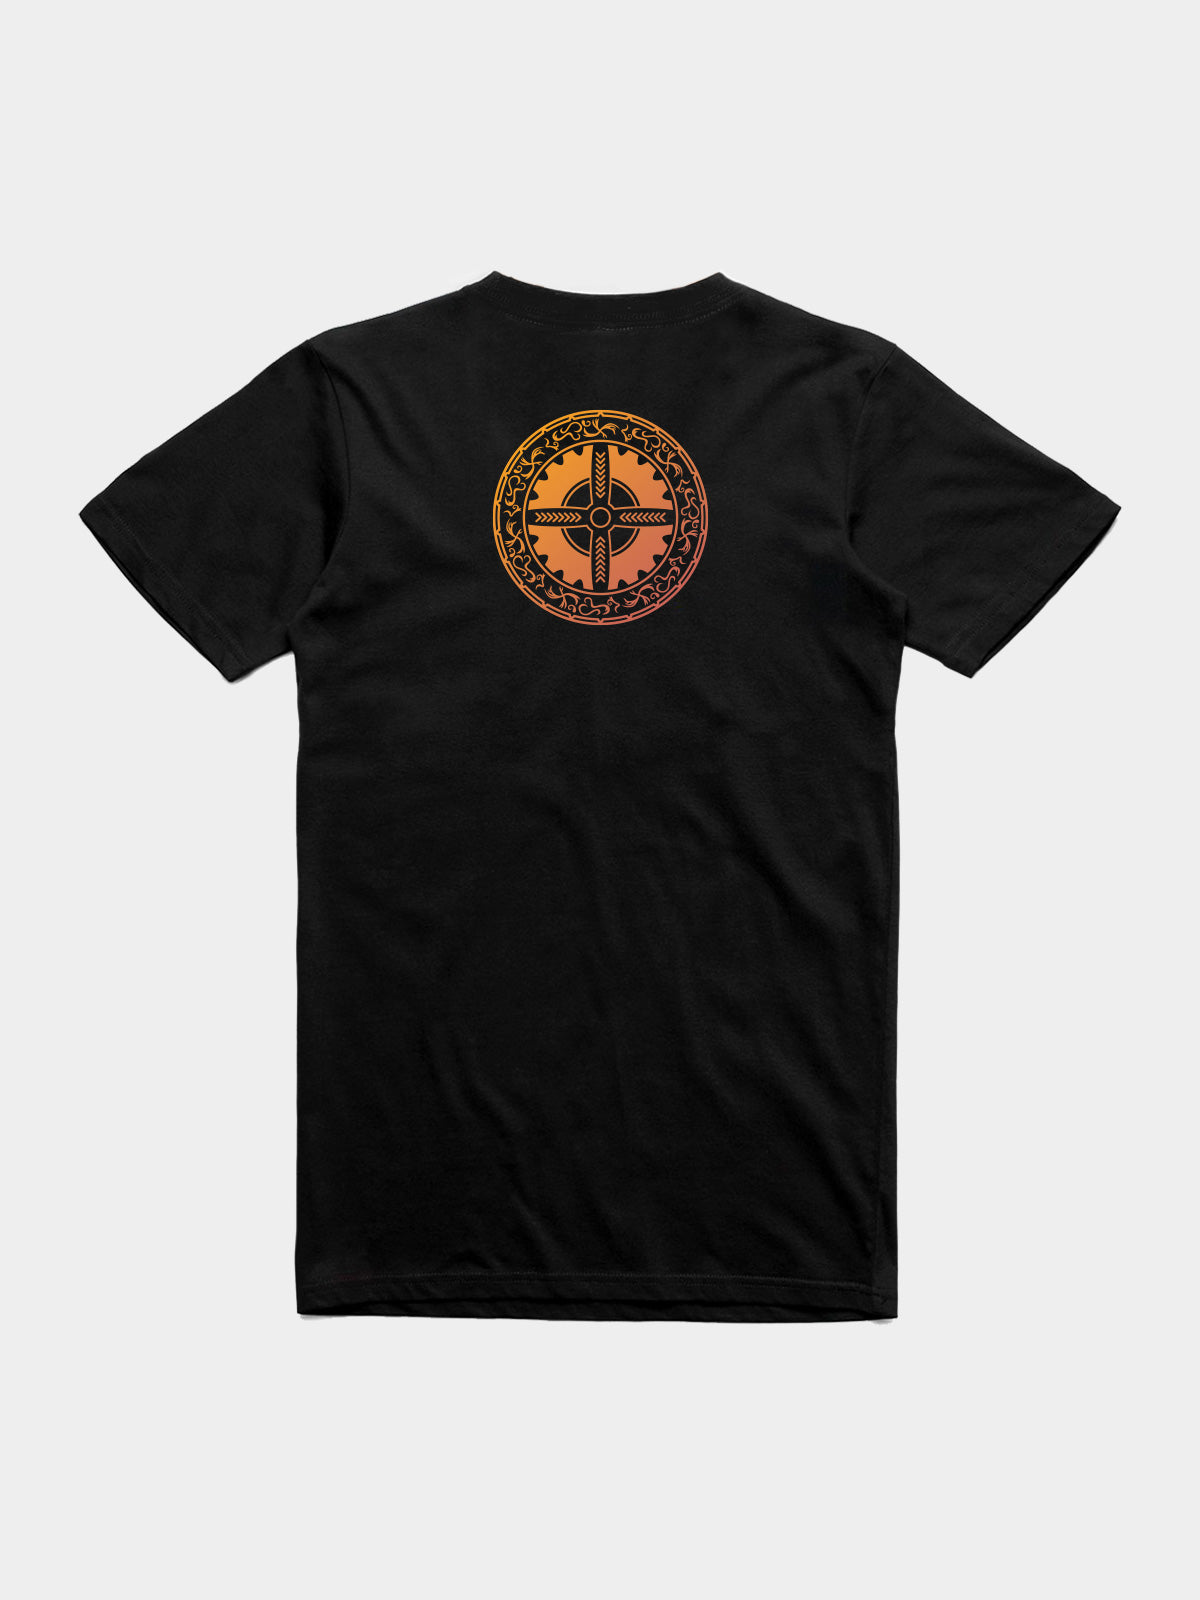 Warrior Nun T-Shirt